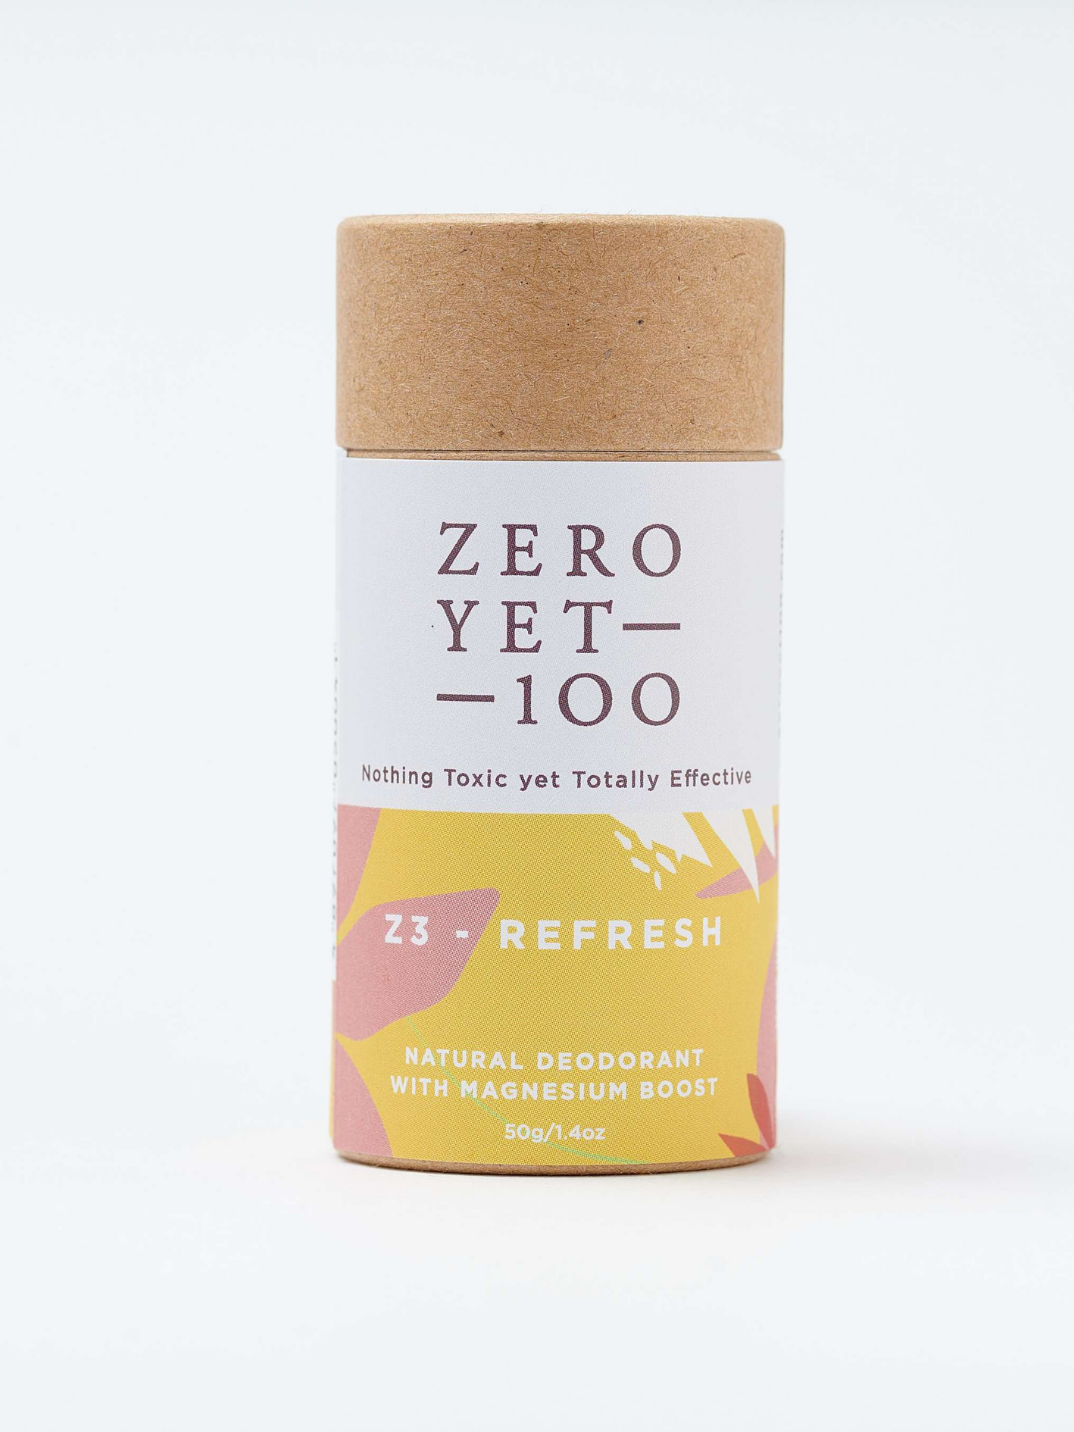 Z3 Refresher deodorant push-up stick Zero Yet 100